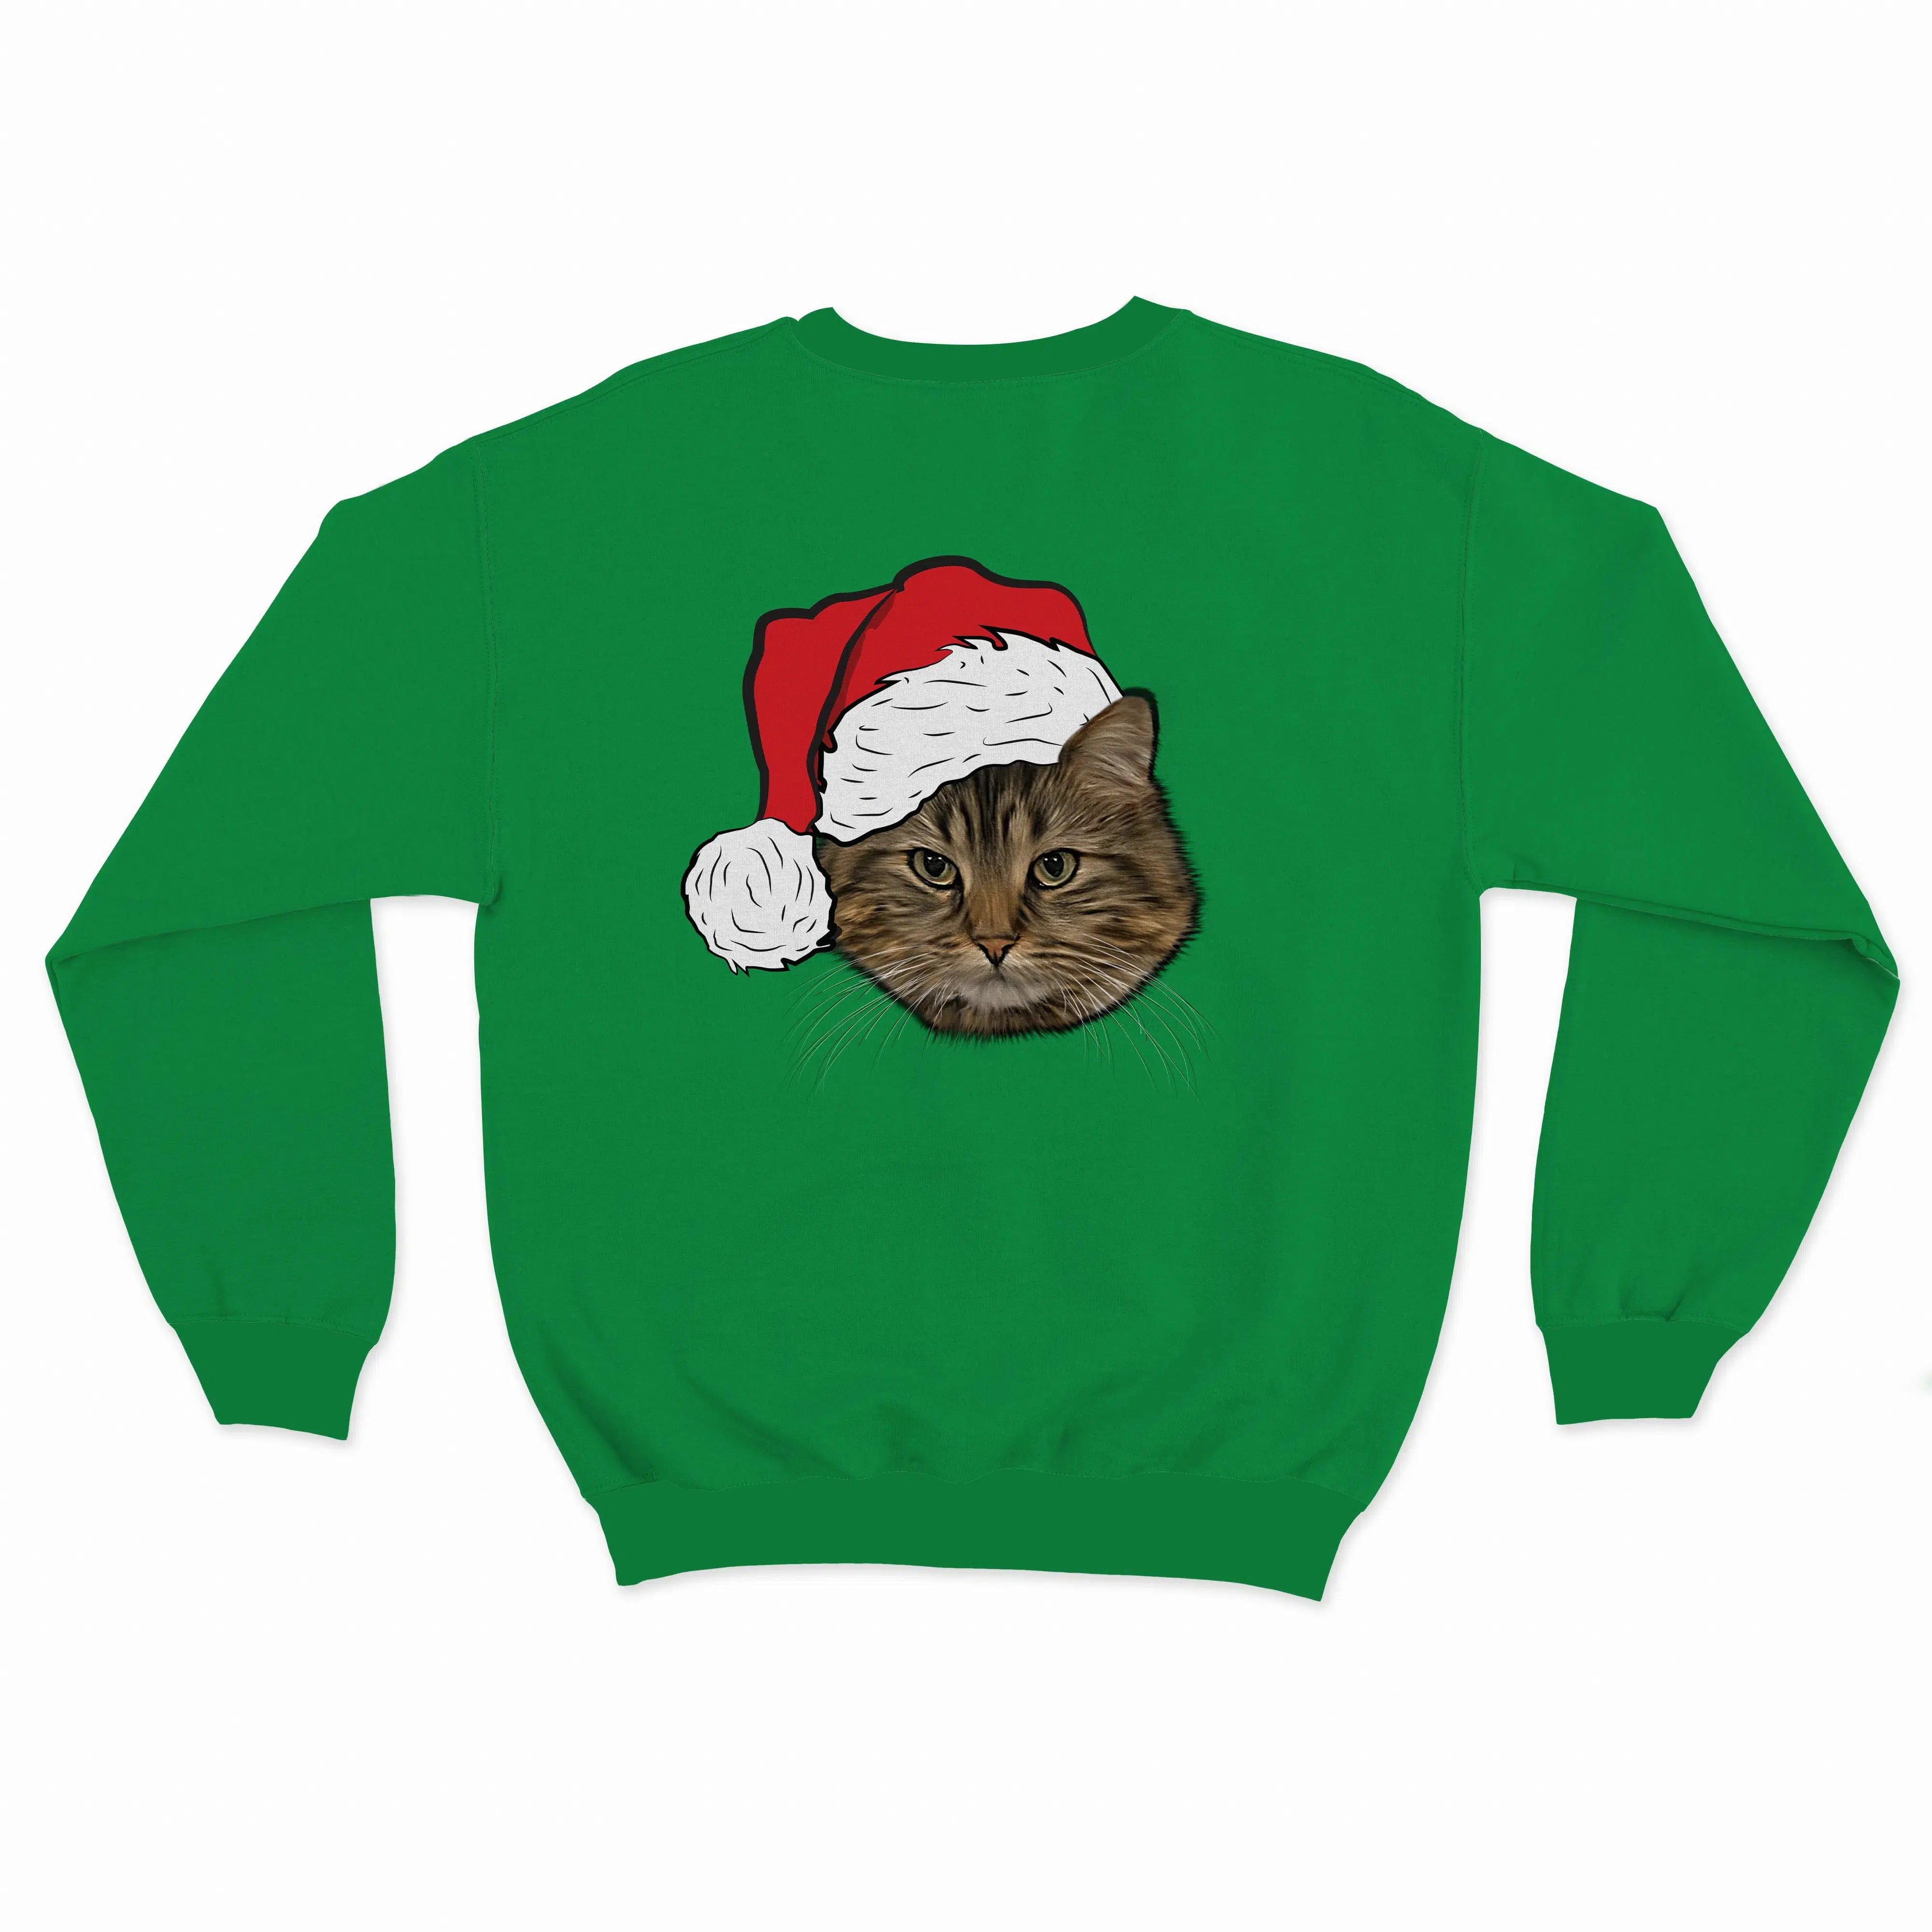 Novelty Pet Face Christmas Sweatshirt